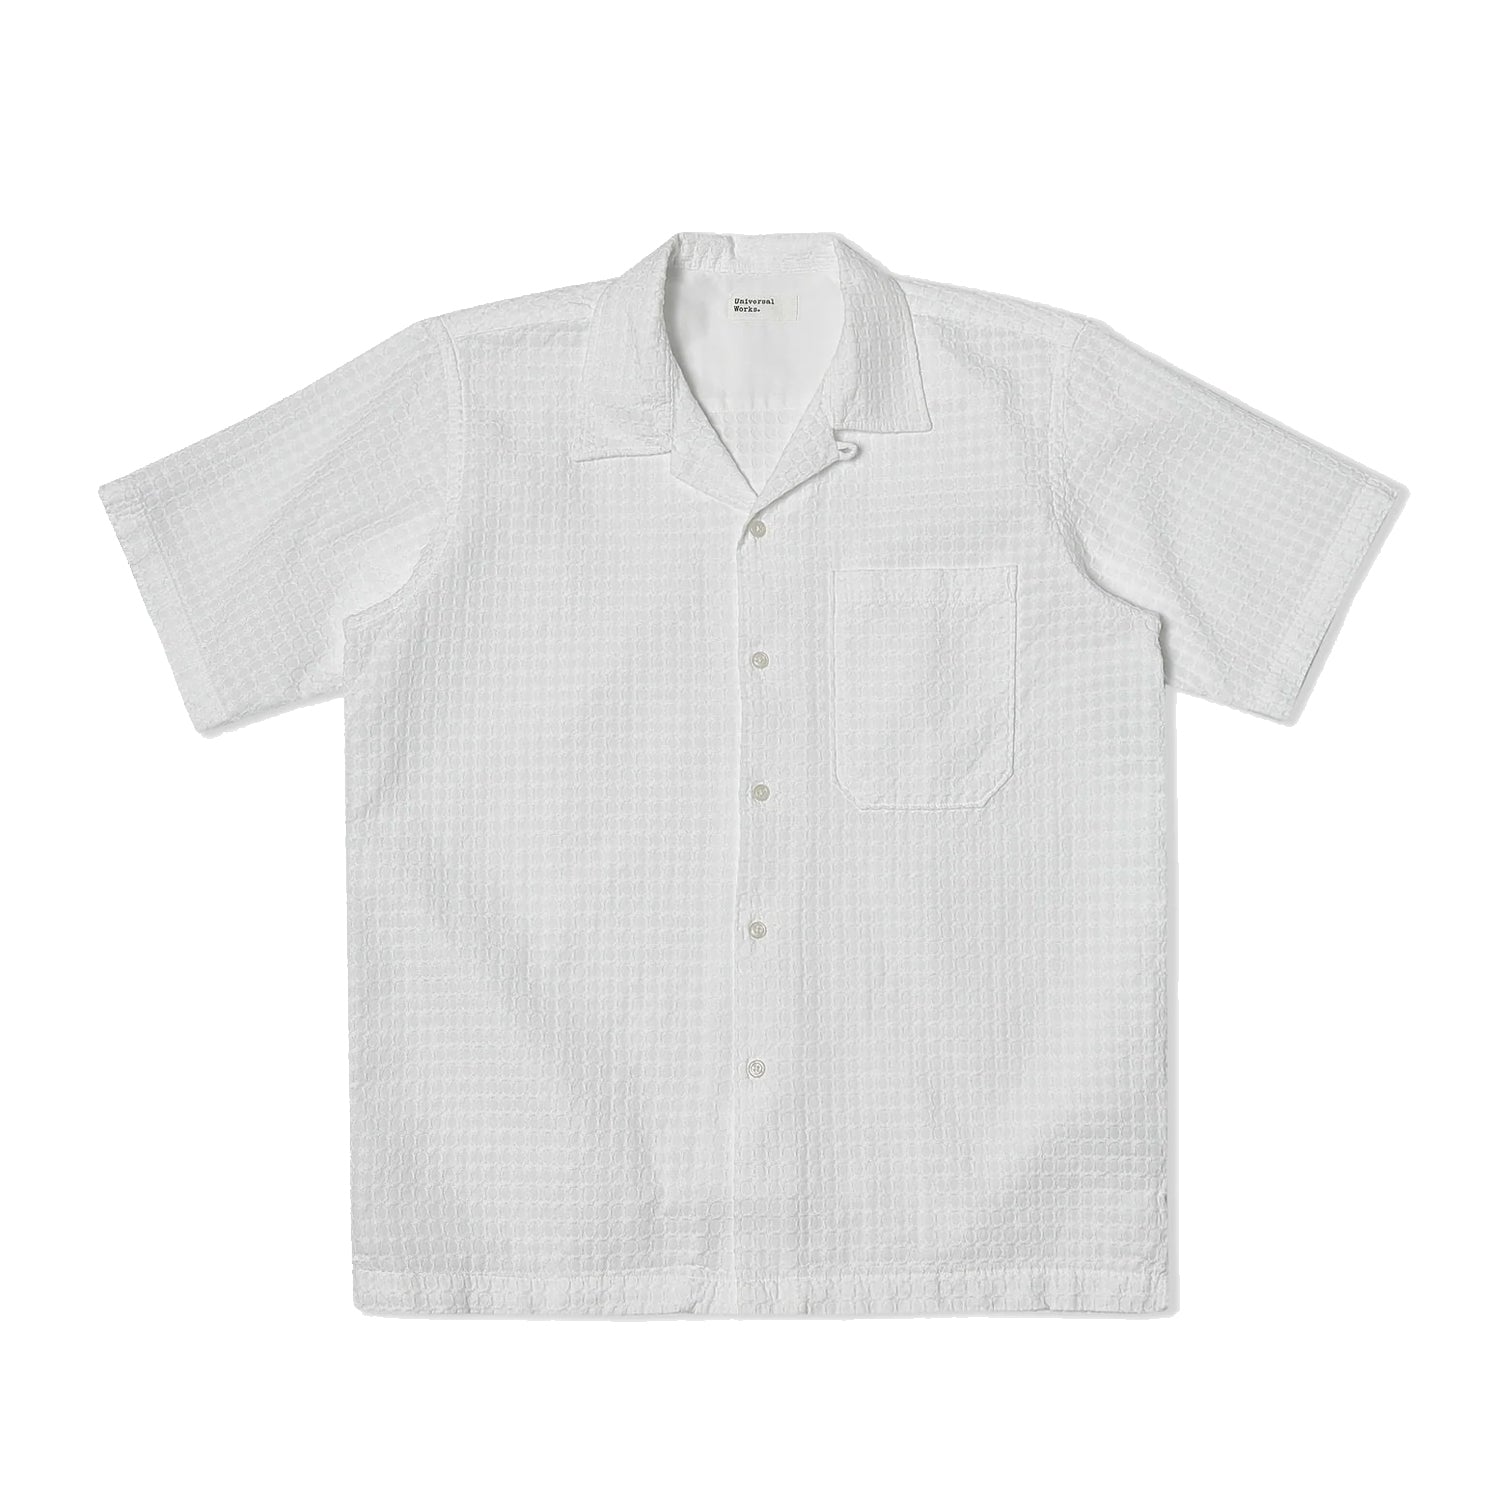 Camp Shirt - Delos Cotton